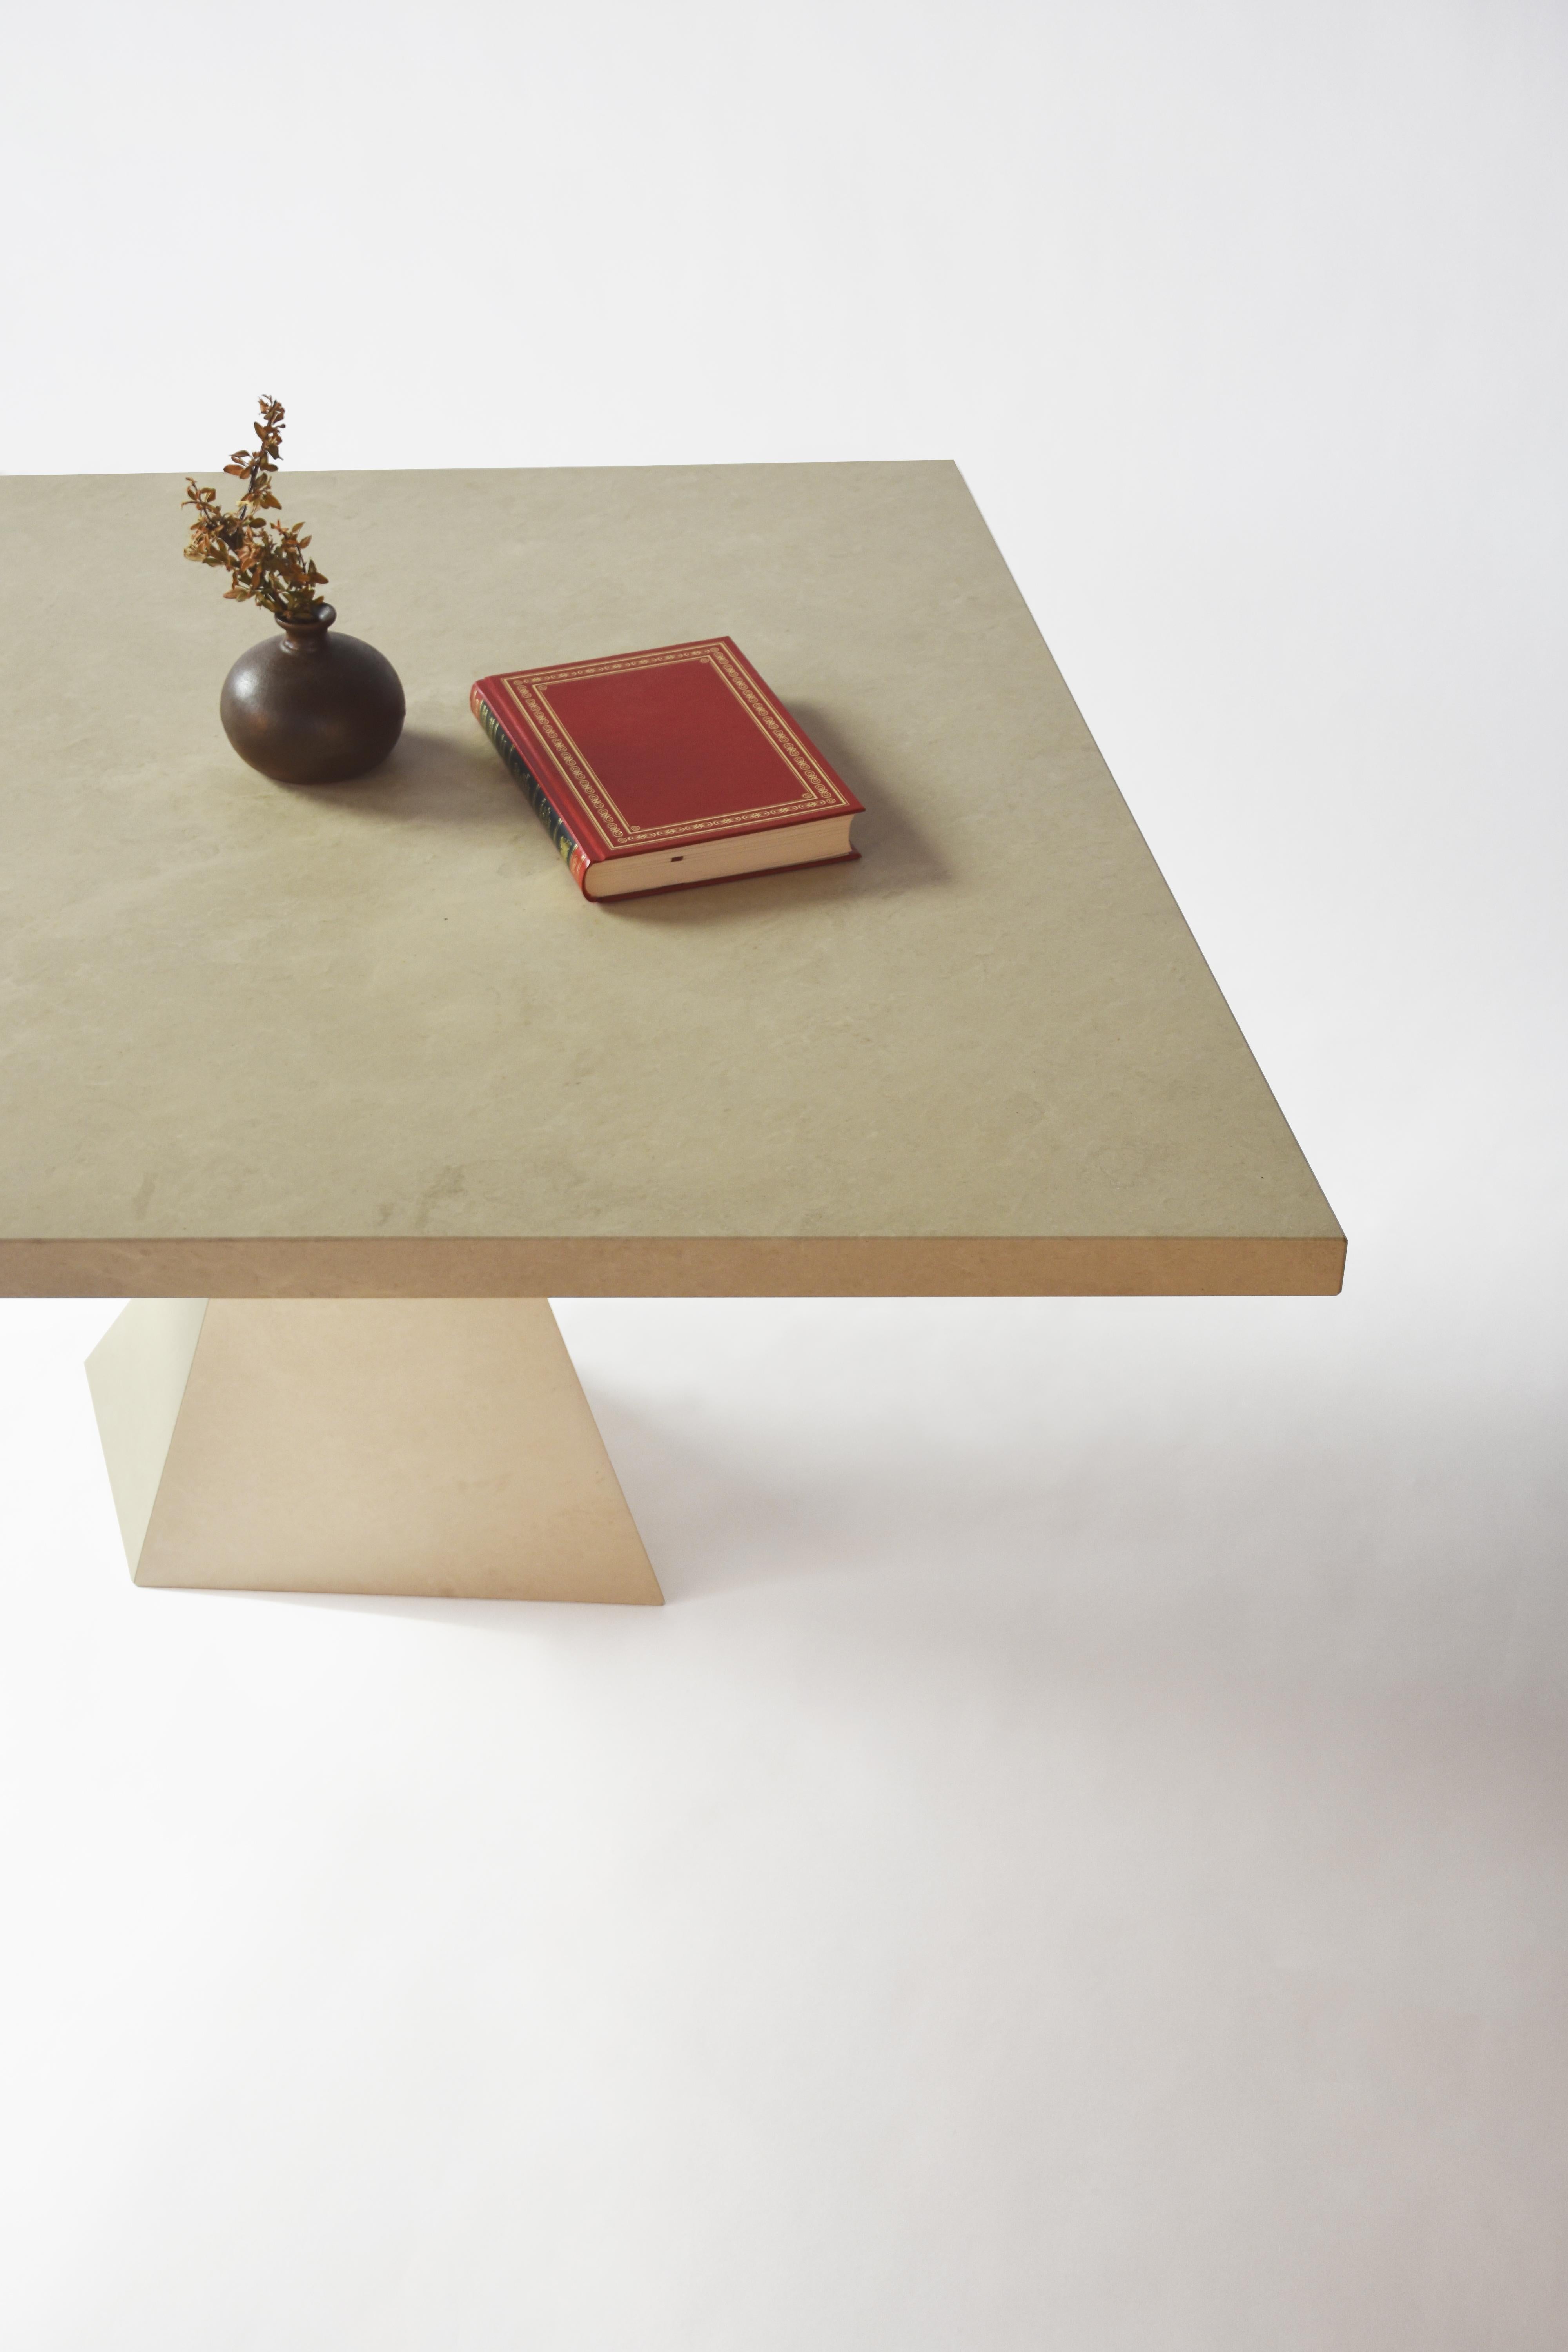 Post-Modern Inka Table by Eichkorn